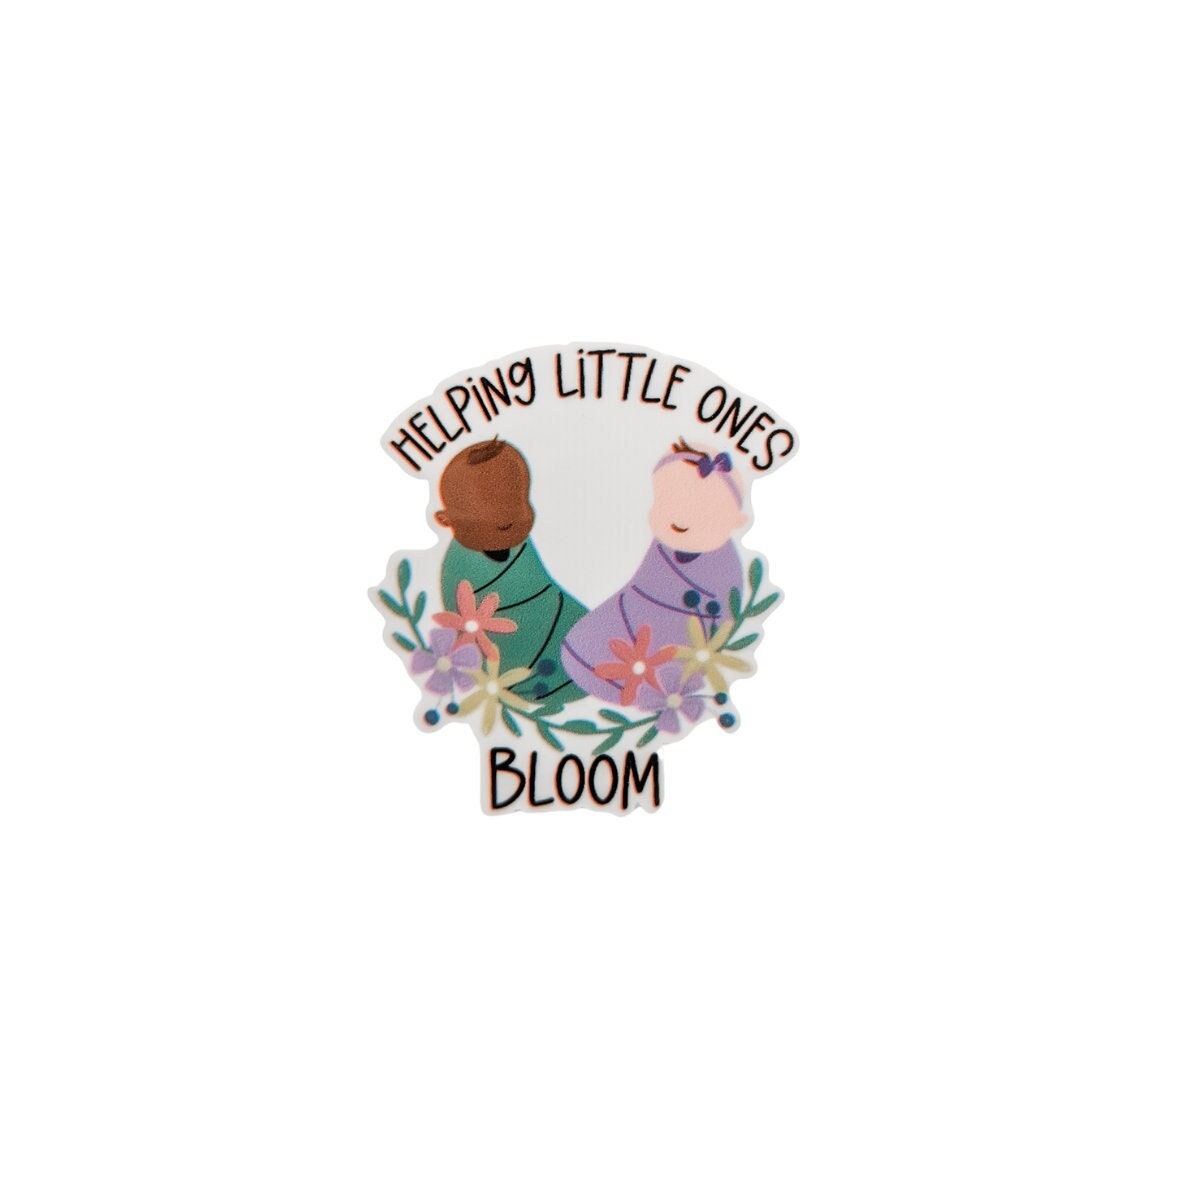 Helping Little Ones Bloom / PLASTIC Add on / 14B31